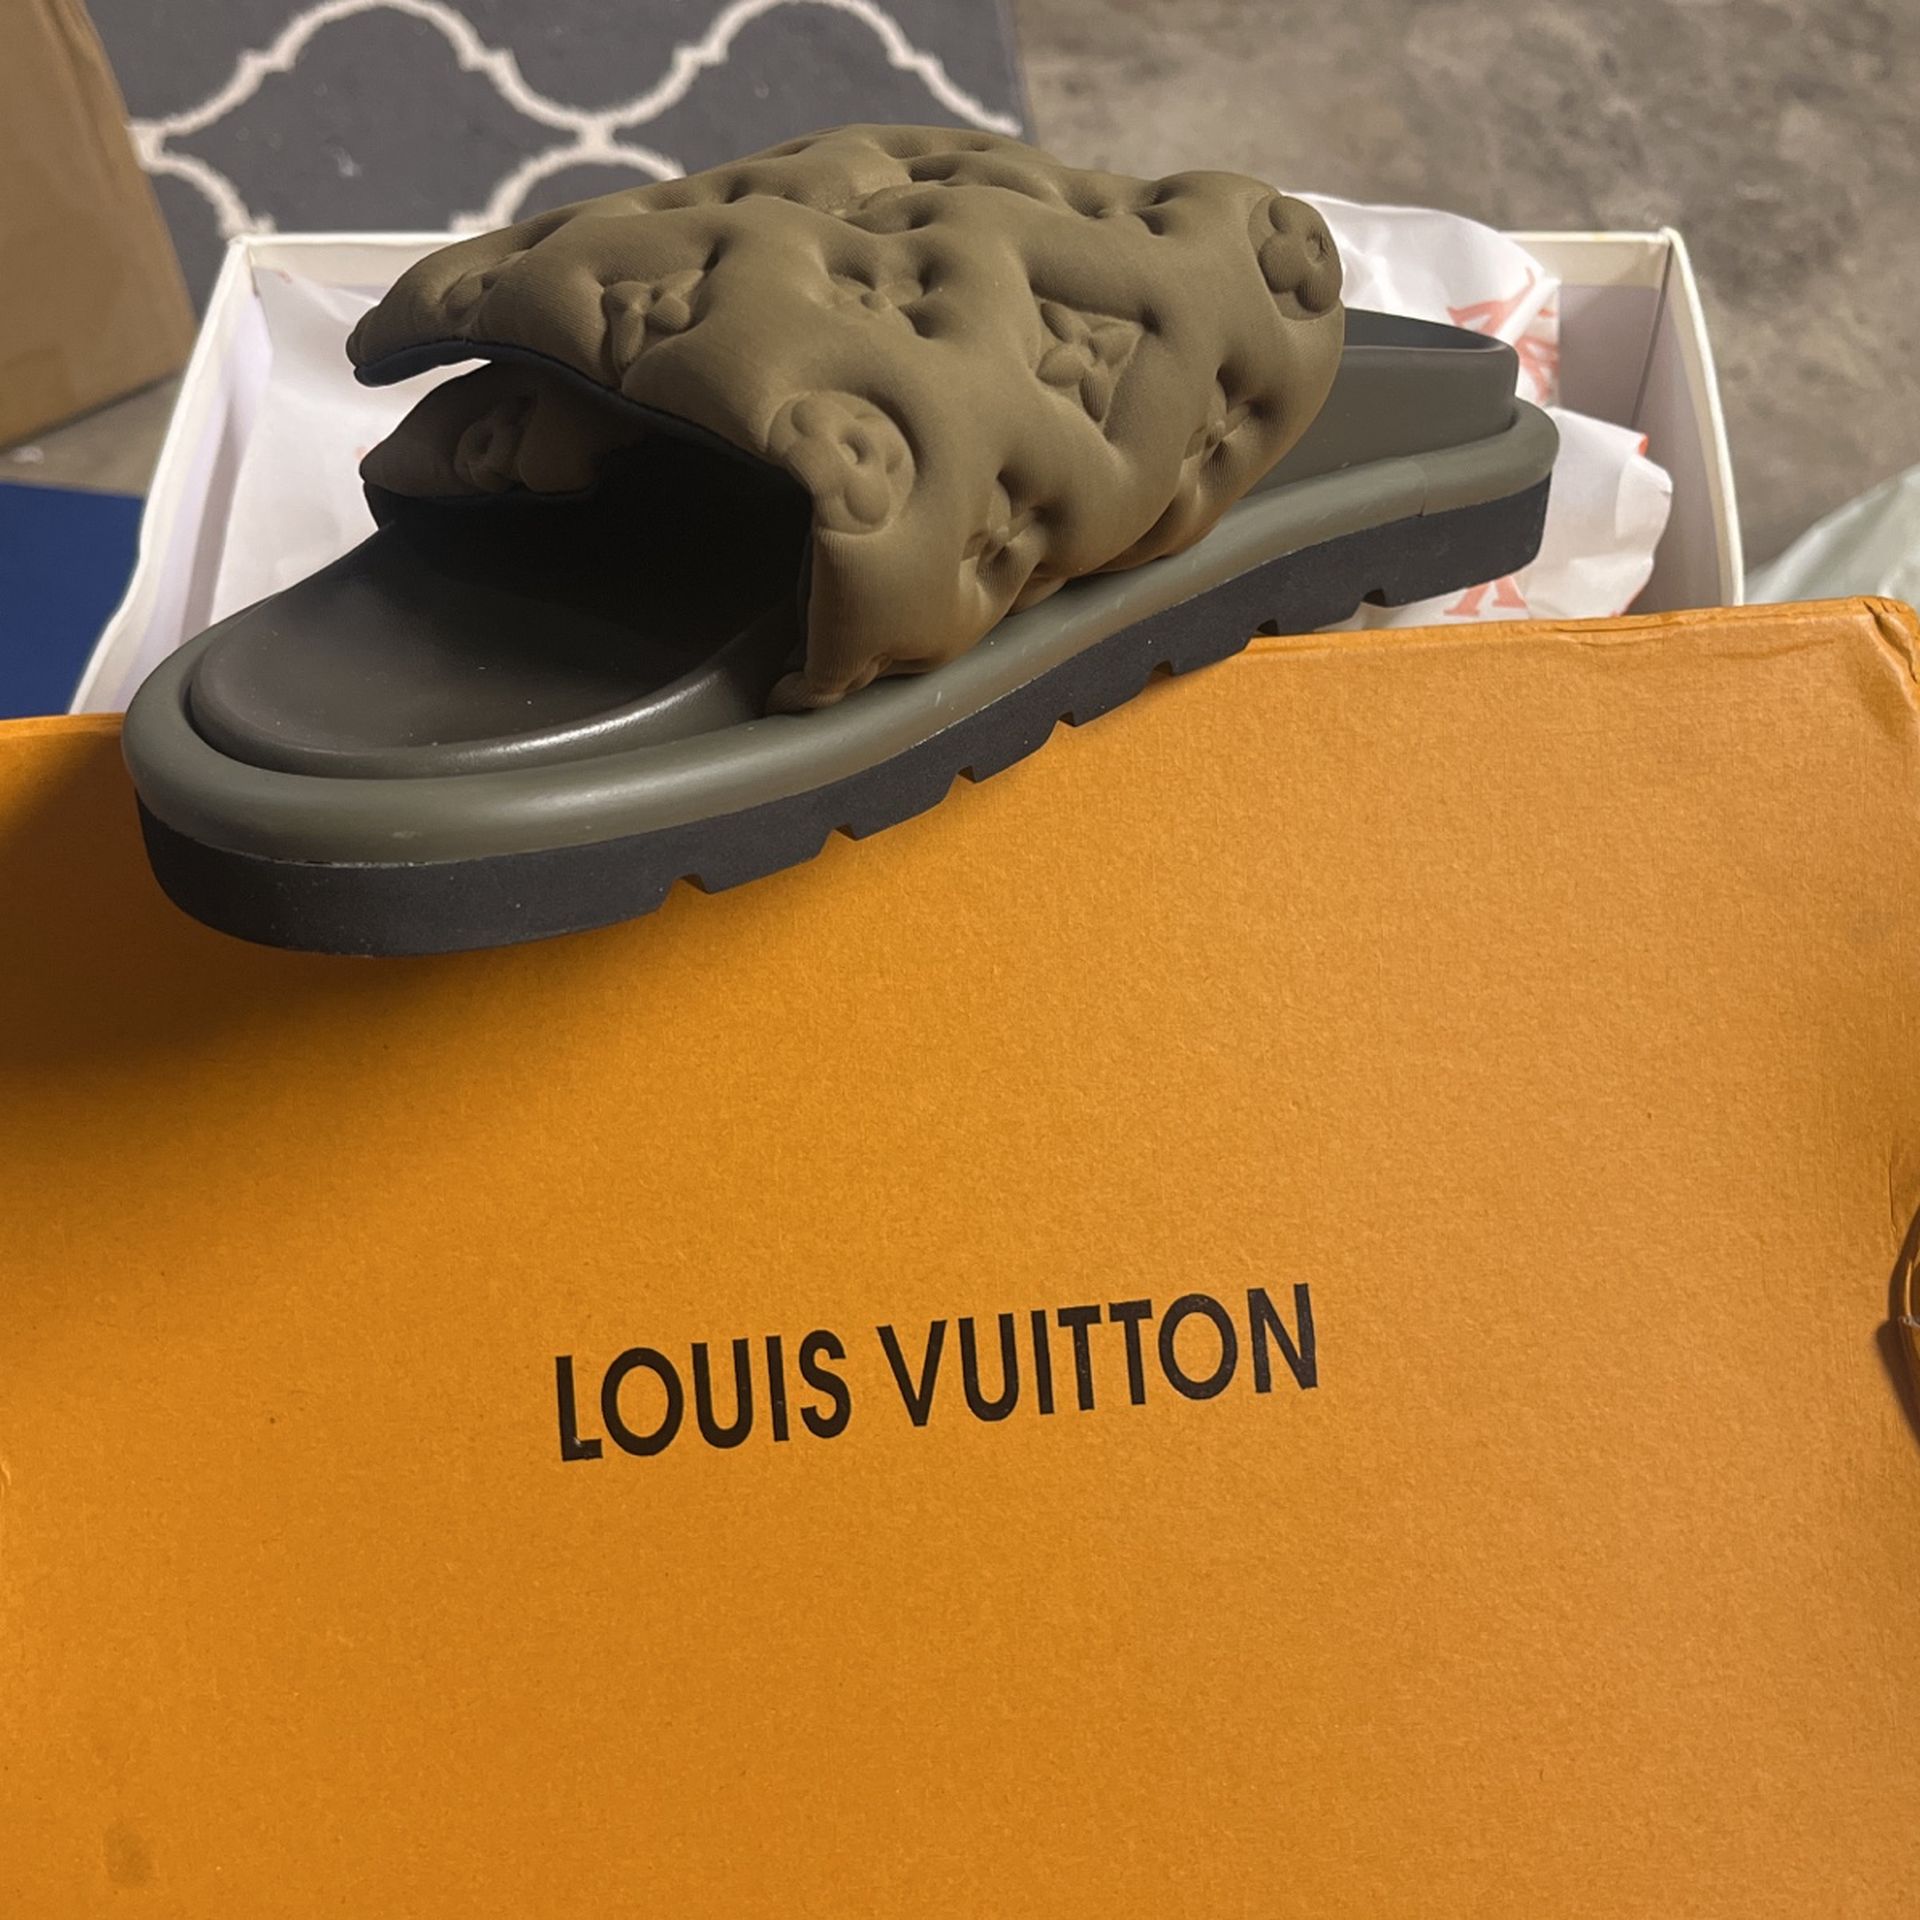 Louis Vuitton Slides for Sale in Modesto, CA - OfferUp